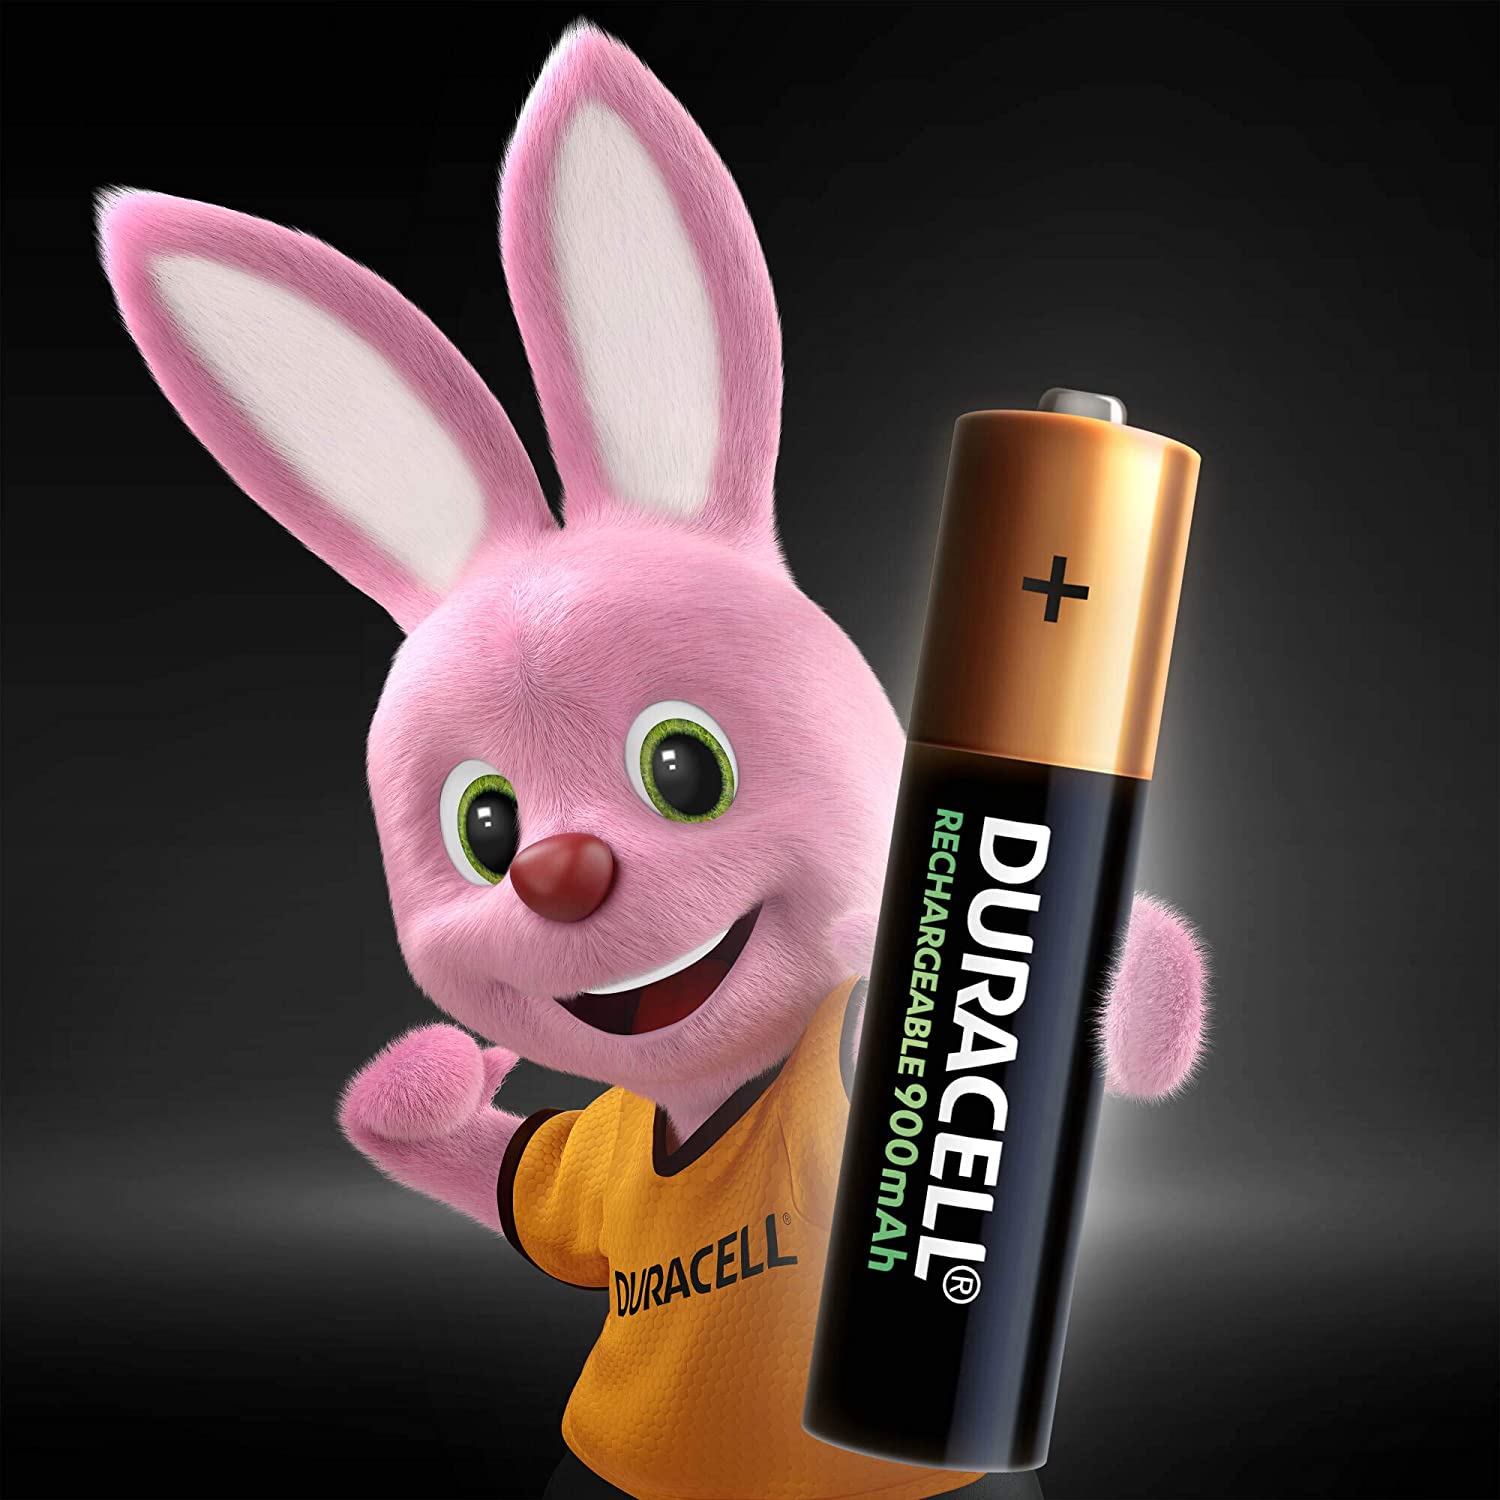 Duracel Rechargeable AAA Micro, 1.2V Akku Batterie, 900mAh, 2er-Pack